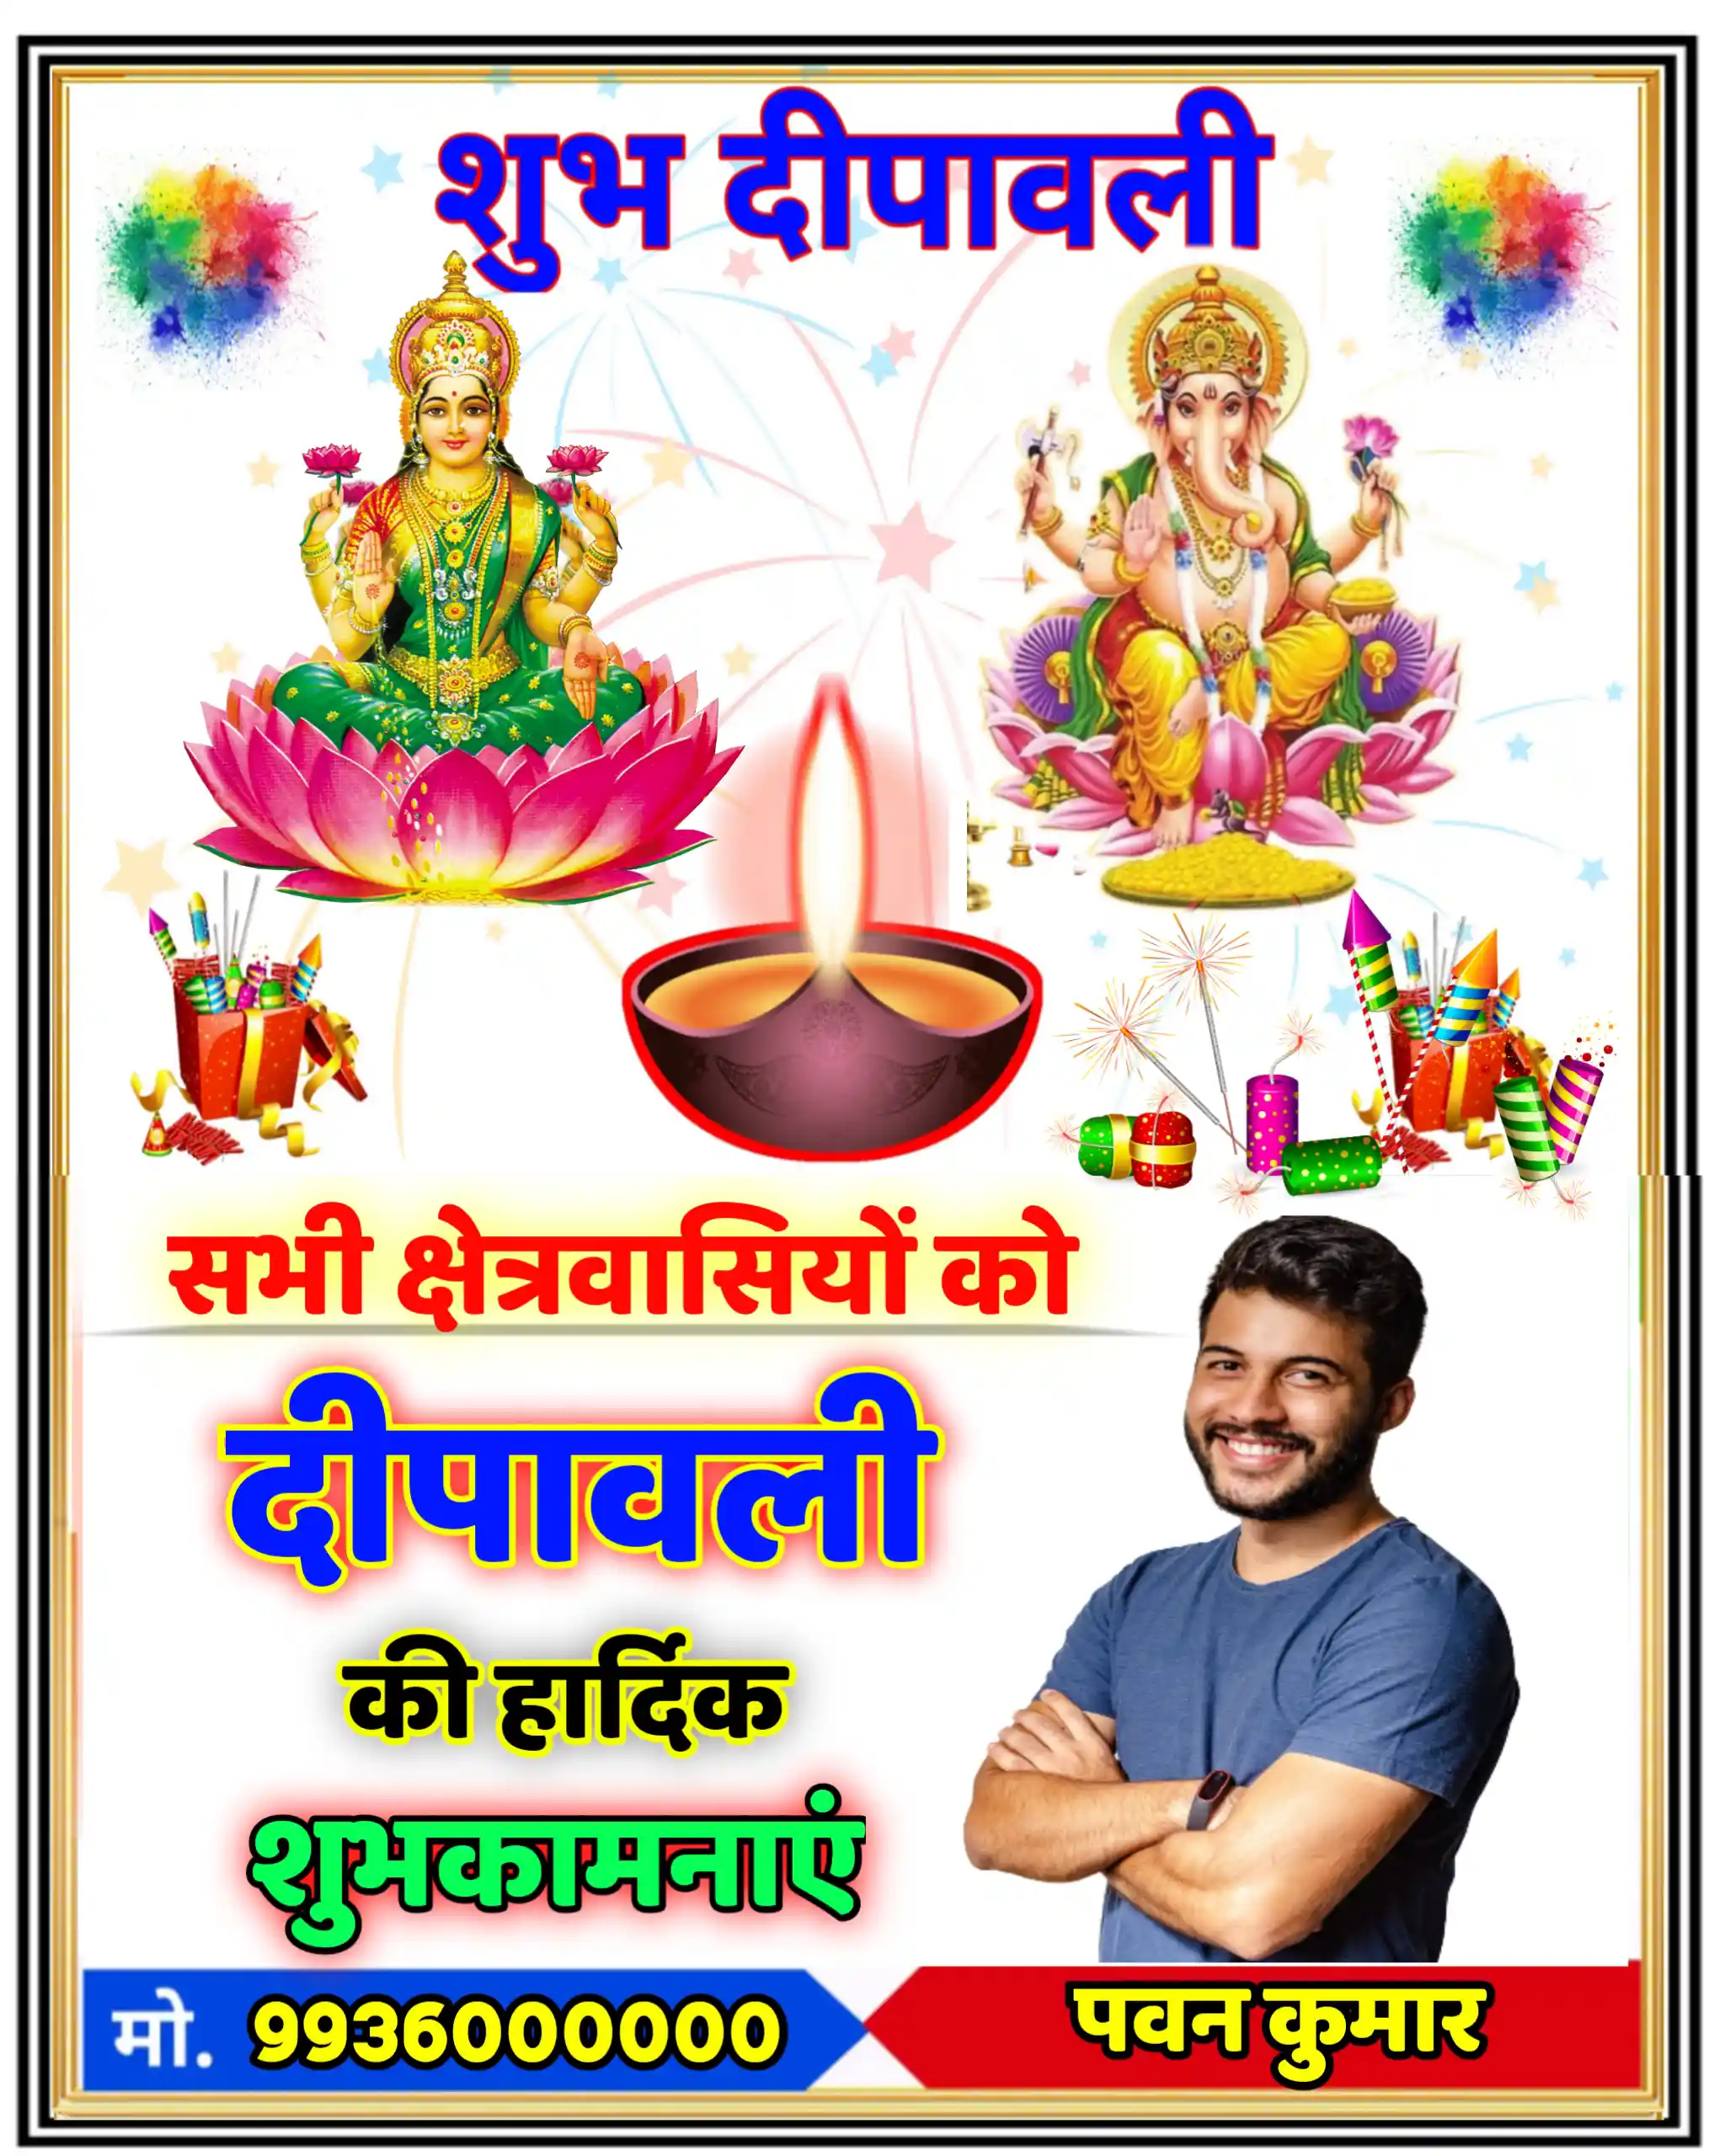 Deepawali poster background download